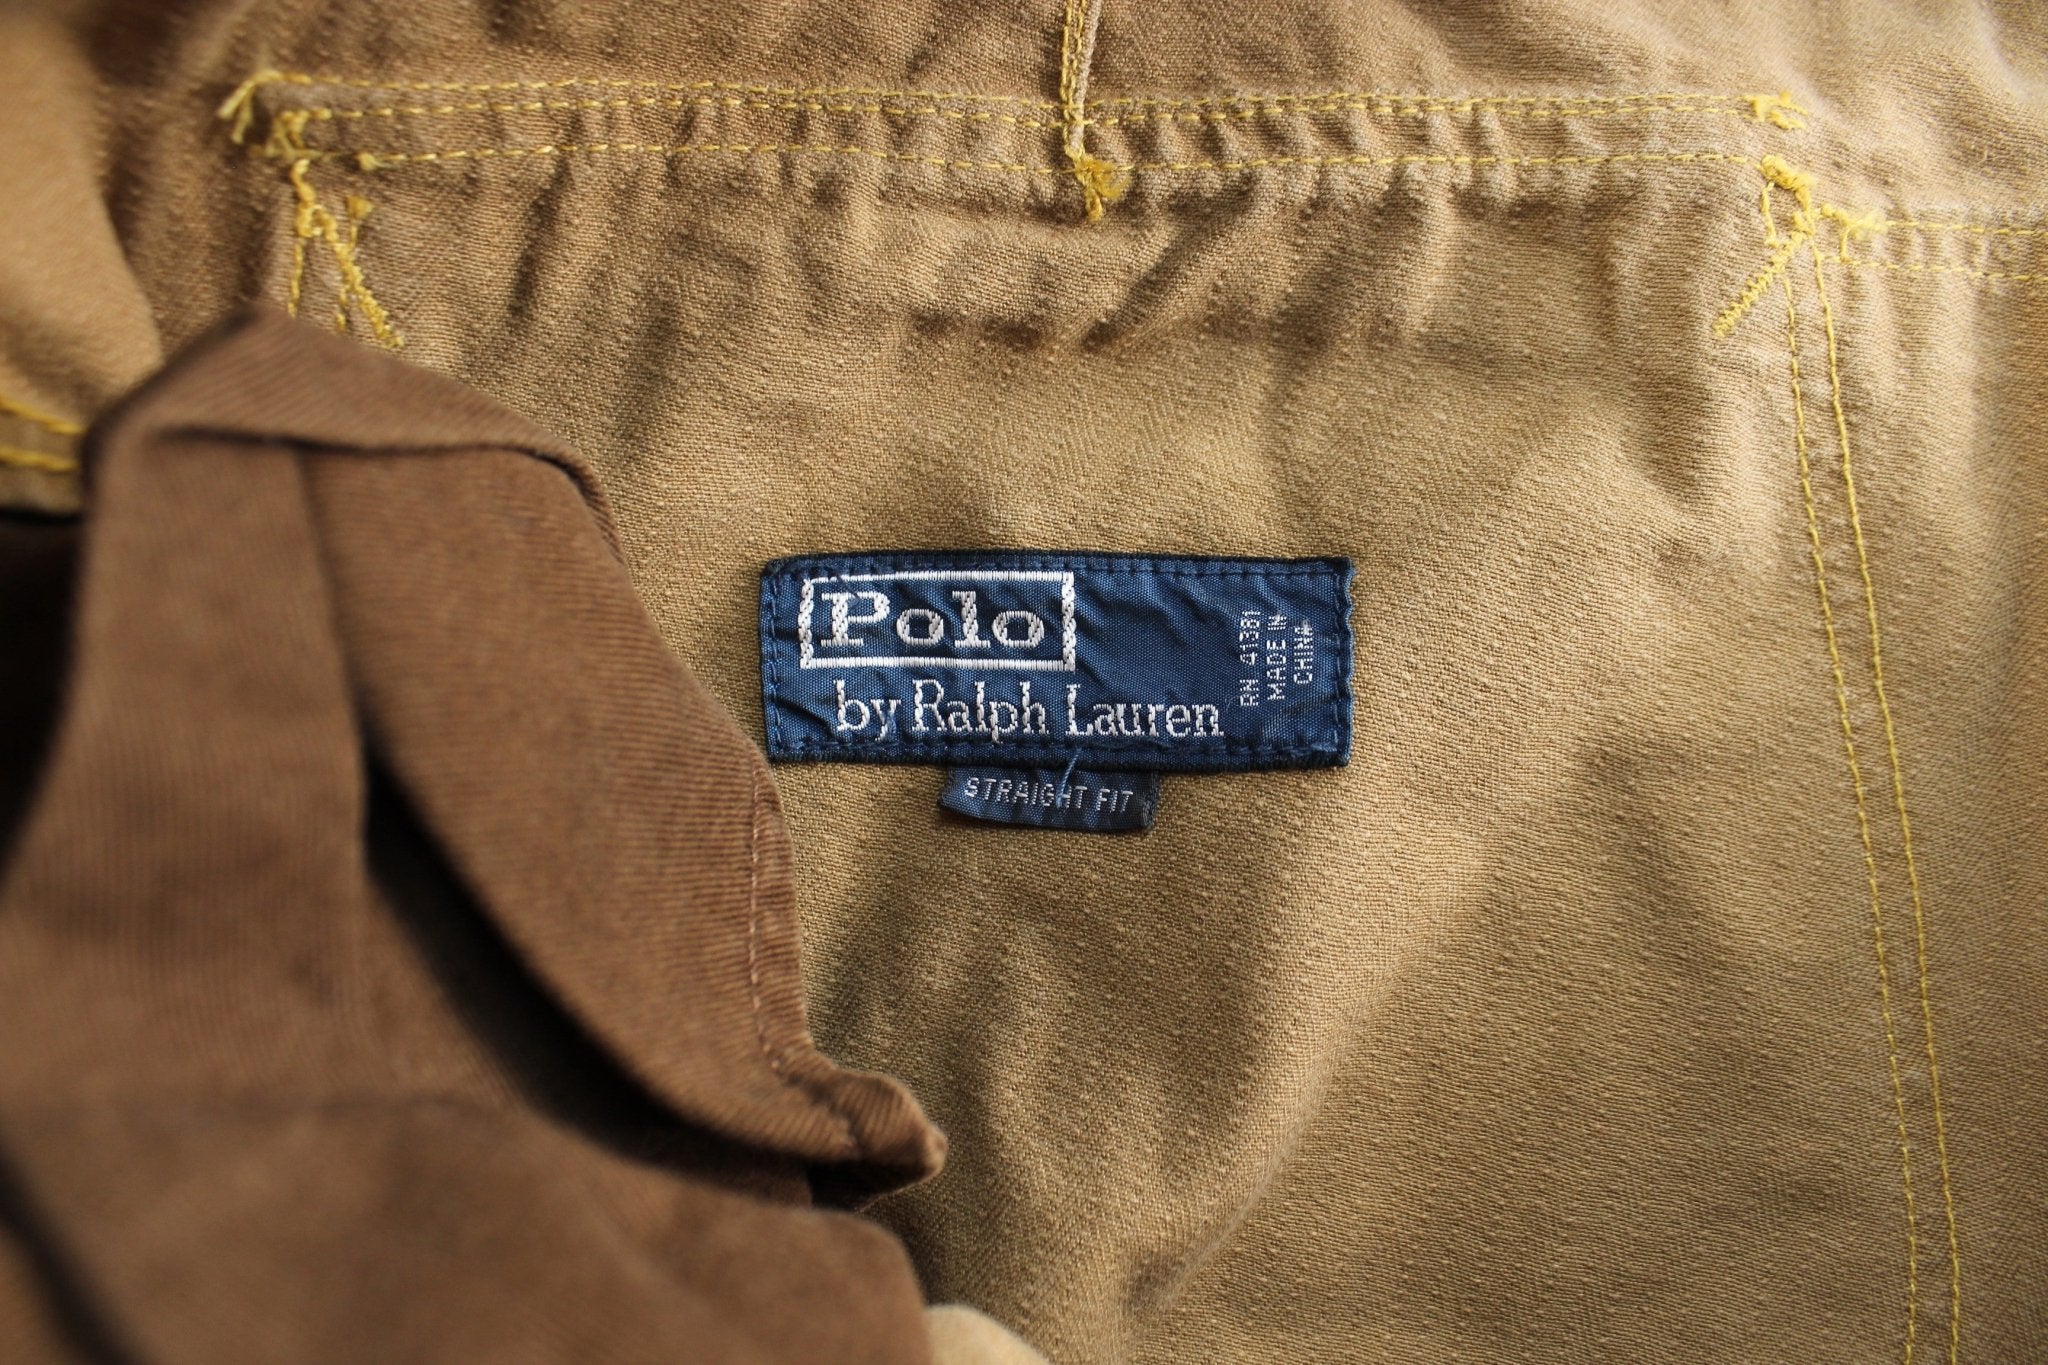 Polo by Ralph Lauren Sportsman's Pants - ThriftedThreads.com